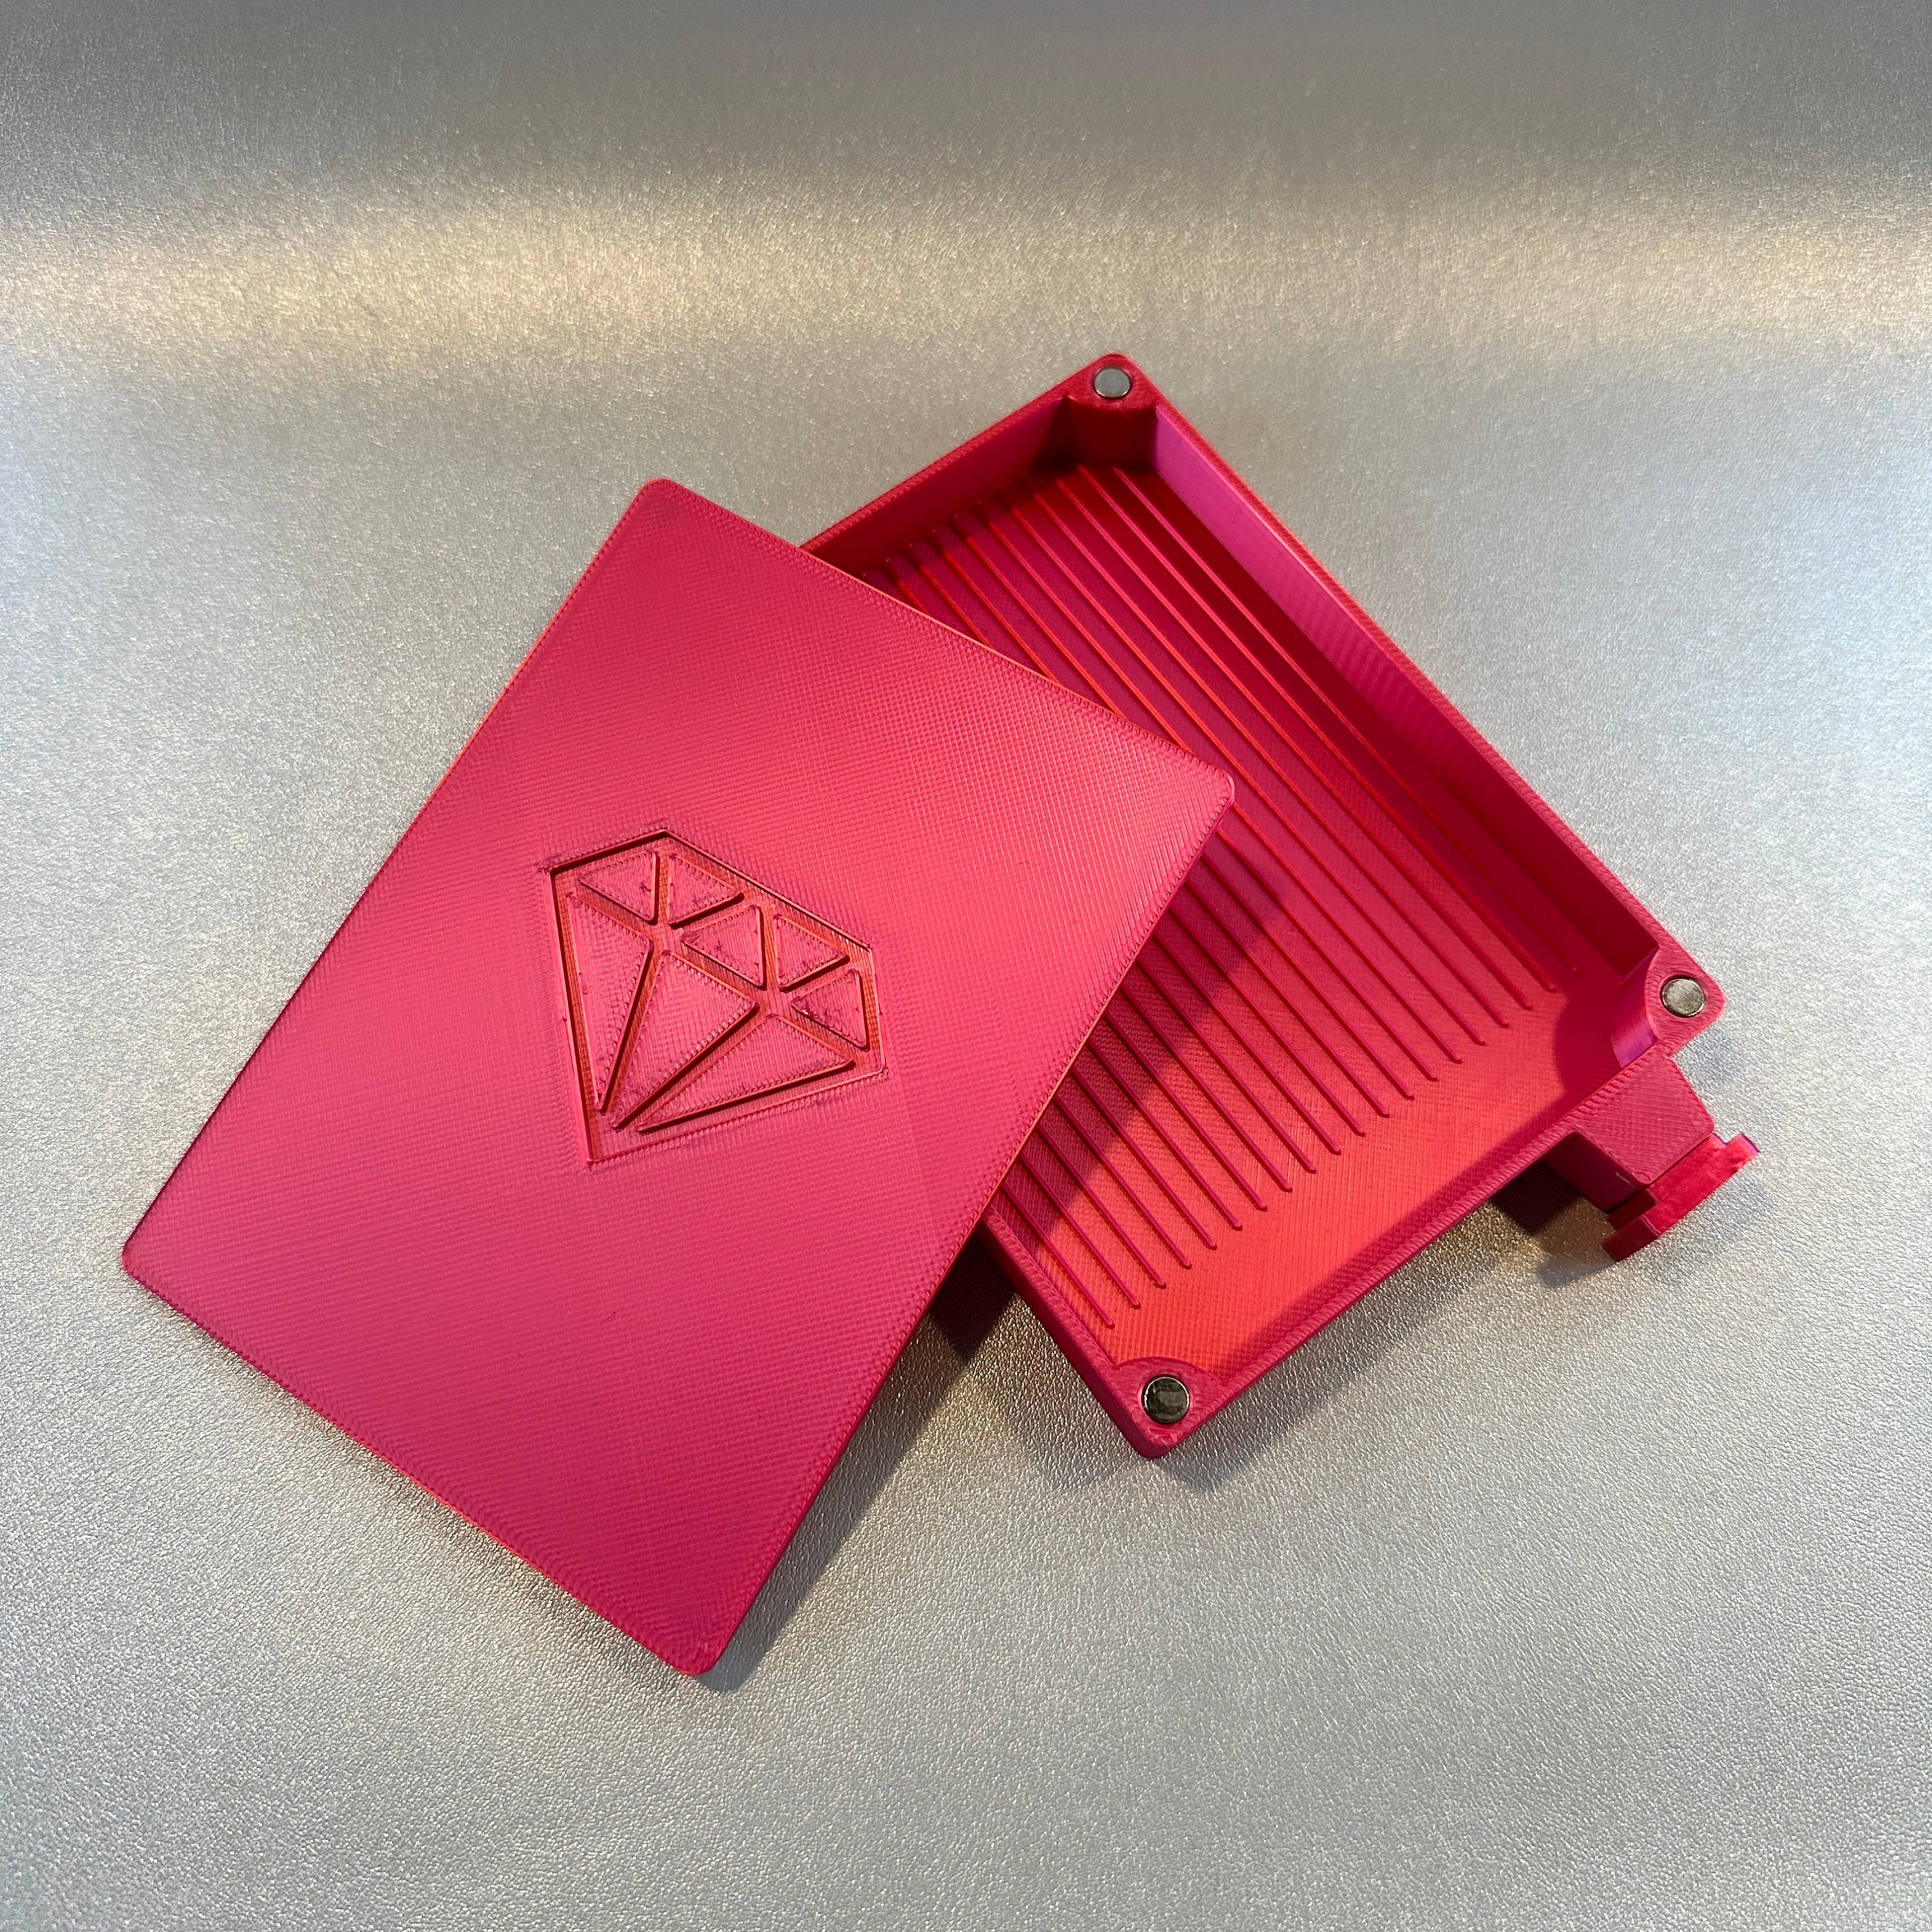 3D Printed Diamond Art Tray (Multiple Colors & Styles